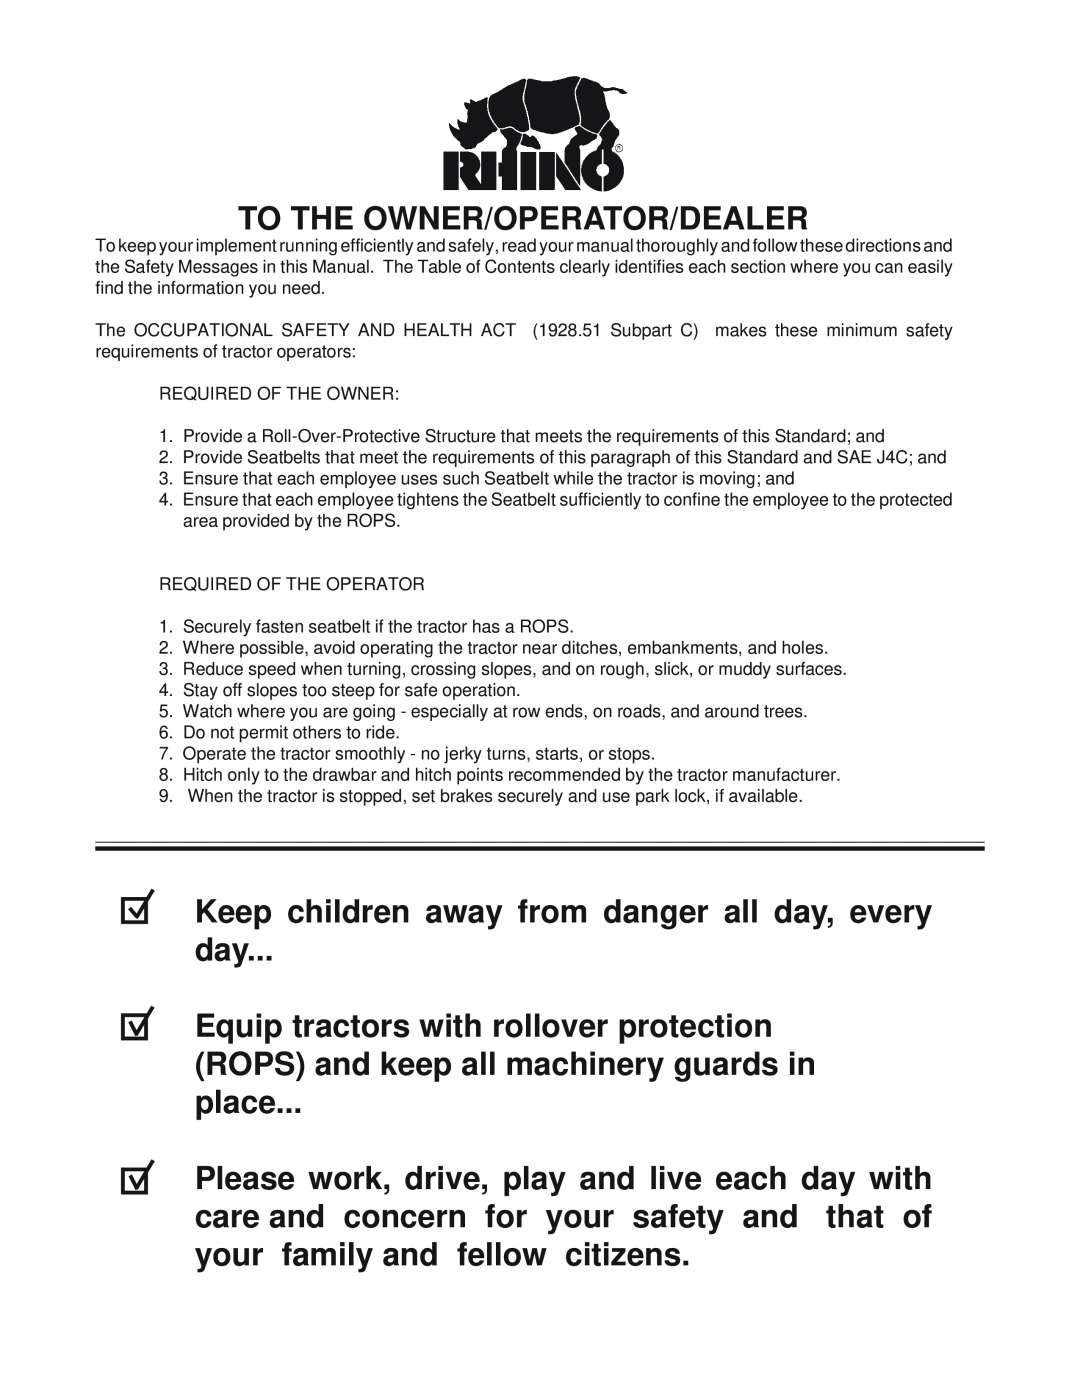 Servis-Rhino DM112, DM82, DM124, DM95 manual To The Owner/Operator/Dealer, Keep children away from danger all day, every day 